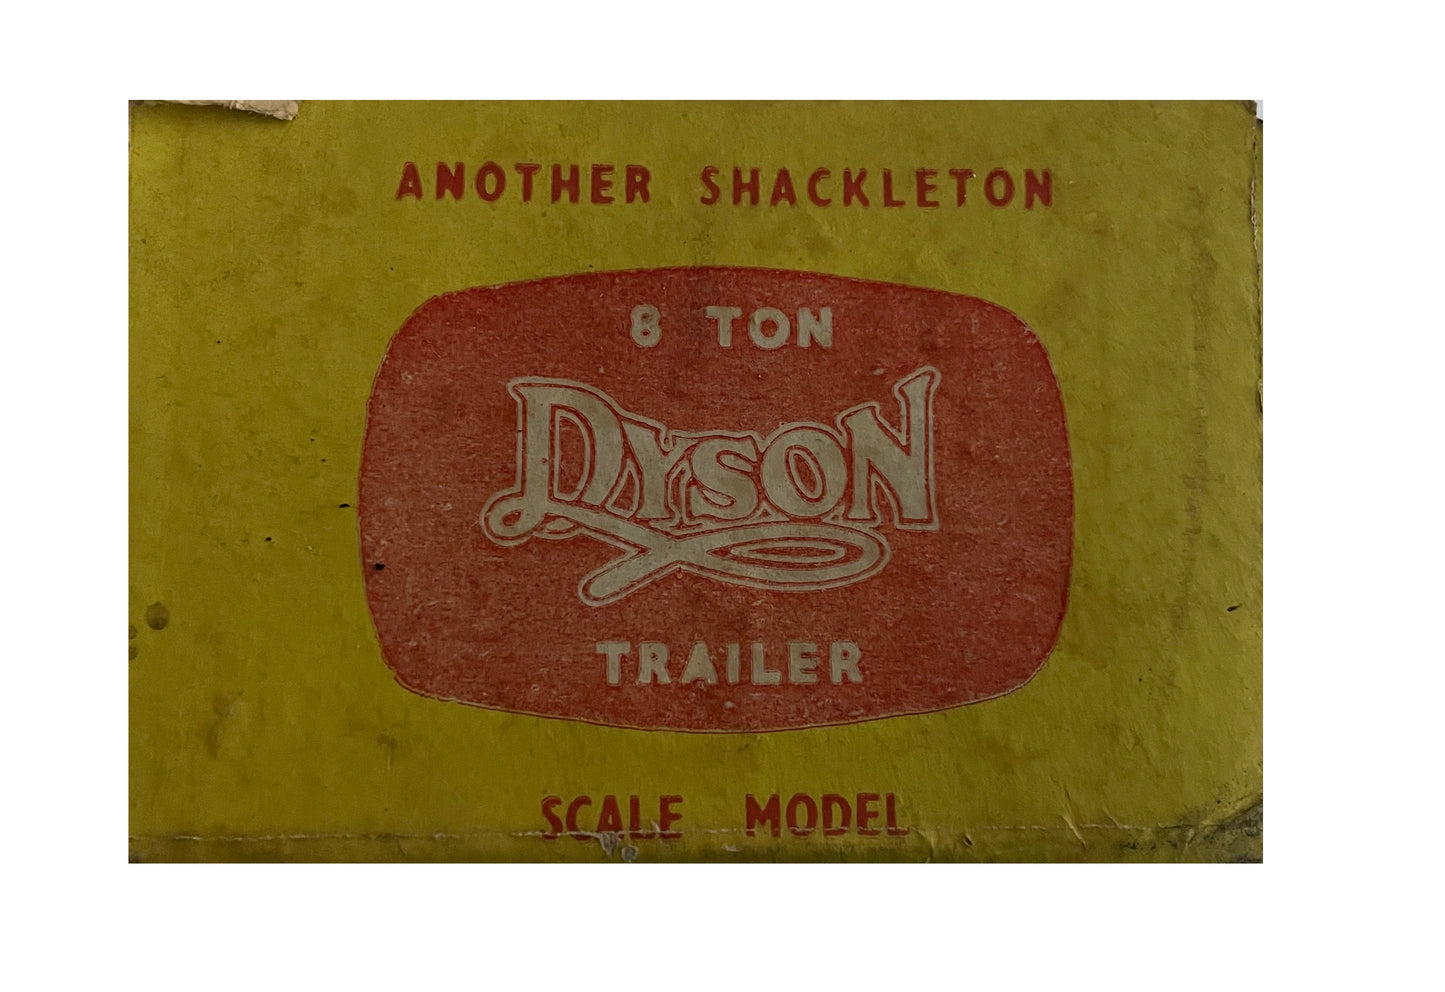 Vintage 1950's Shackleton Model - 8 Ton Dyson Trailer Precision Build Constructional Scale Model - Fantastic Condition - In The Original Box